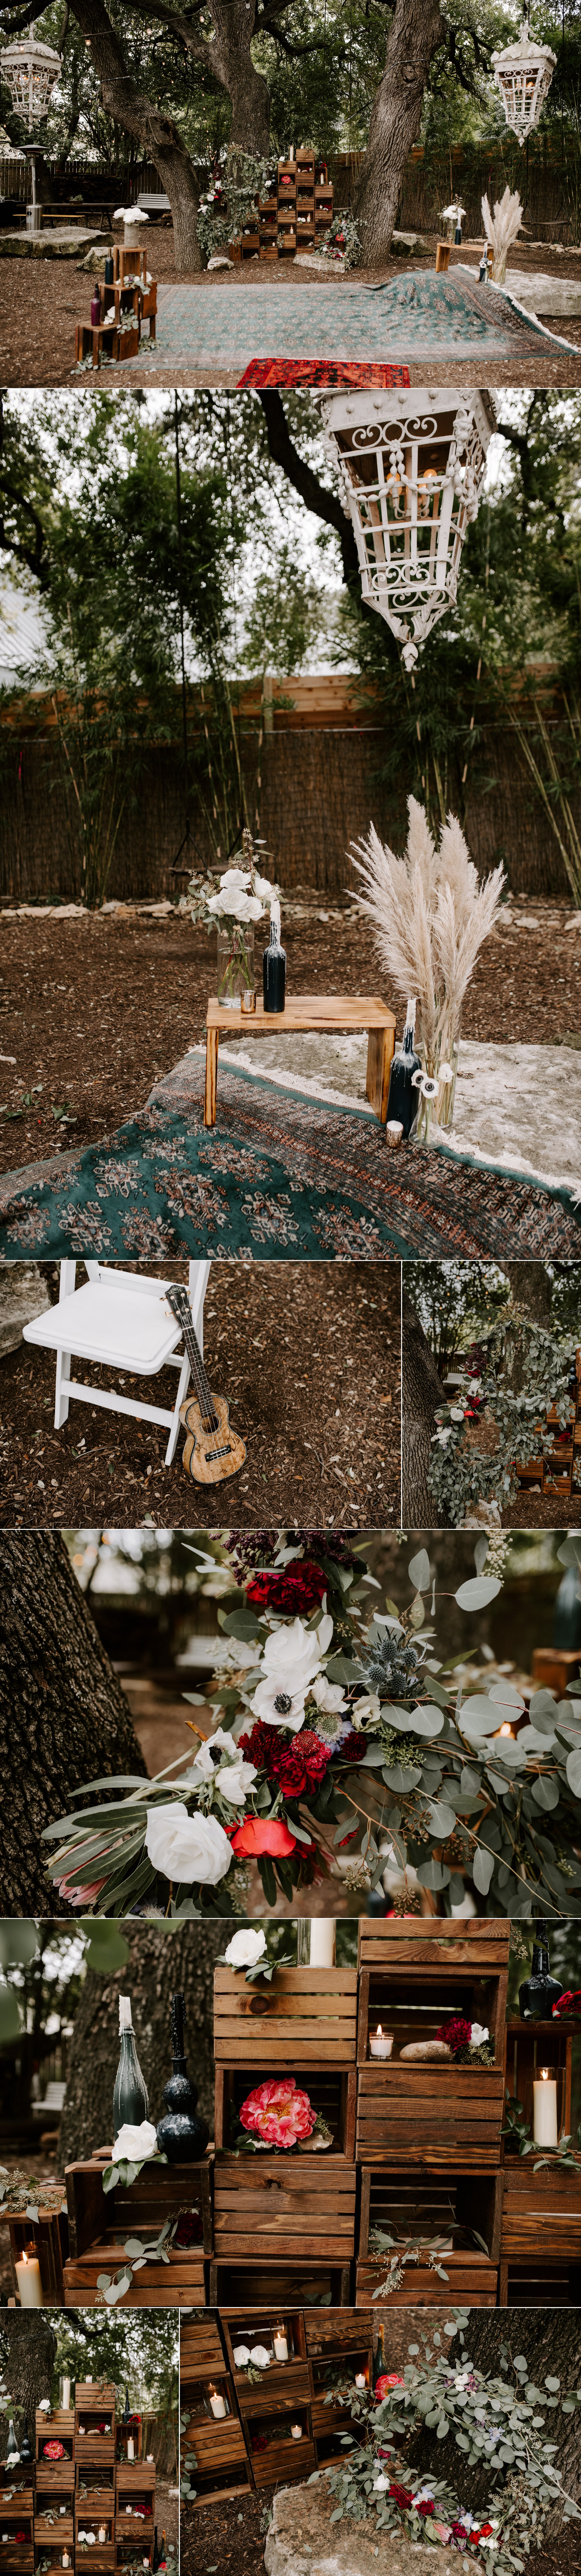  vuka collective austin backyard outdoor boho wedding venue ceremony rug details 